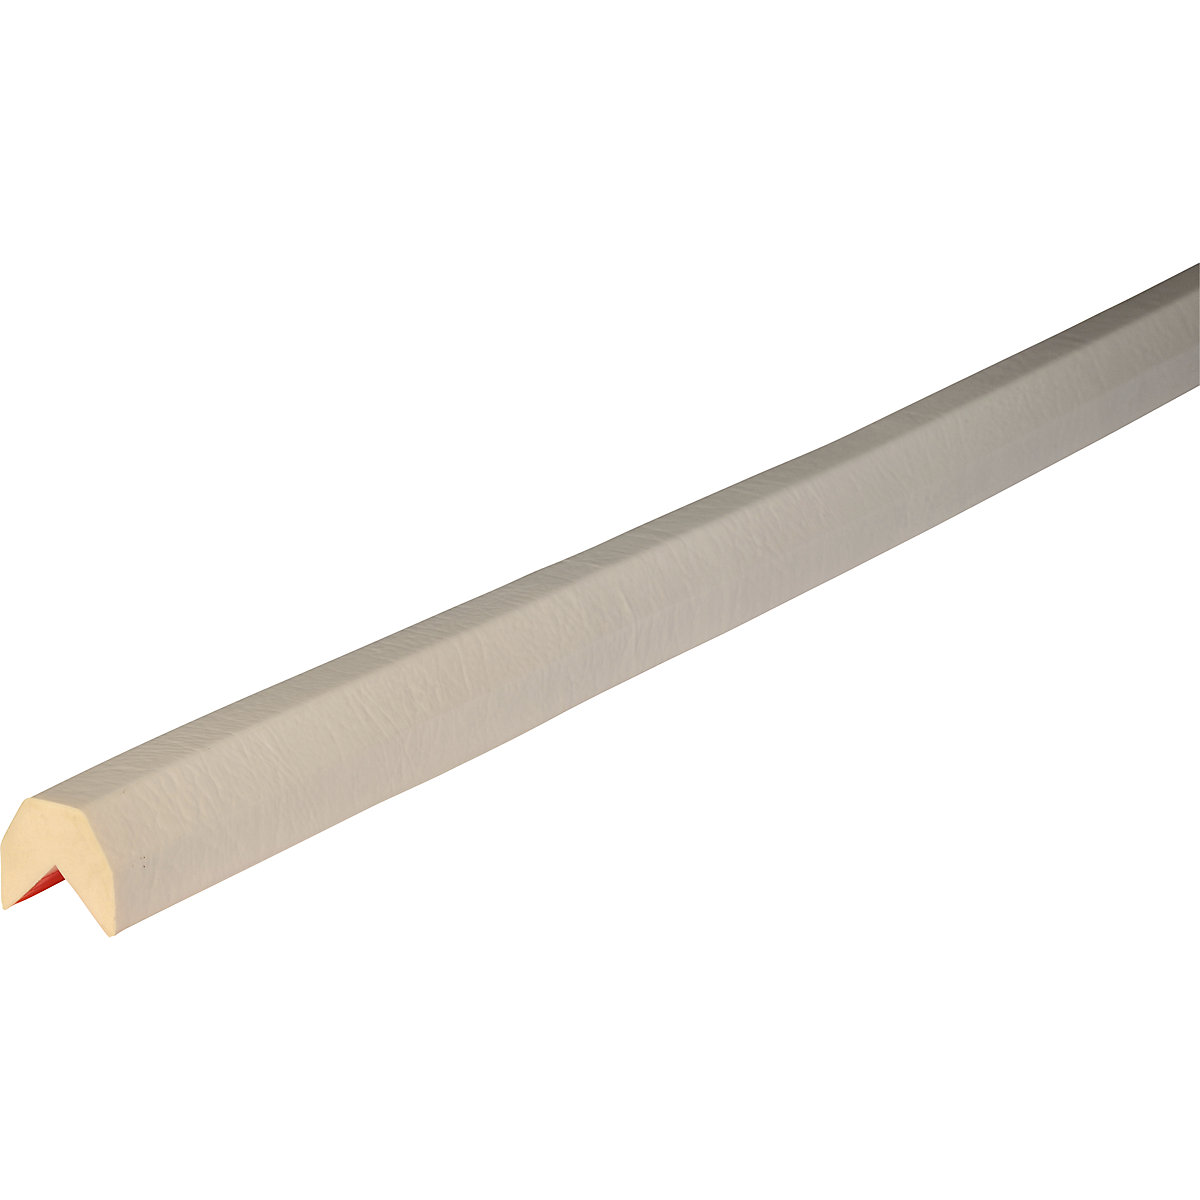 Knuffi® corner protection – SHG, type AA, 1 x 50 m roll, white-11